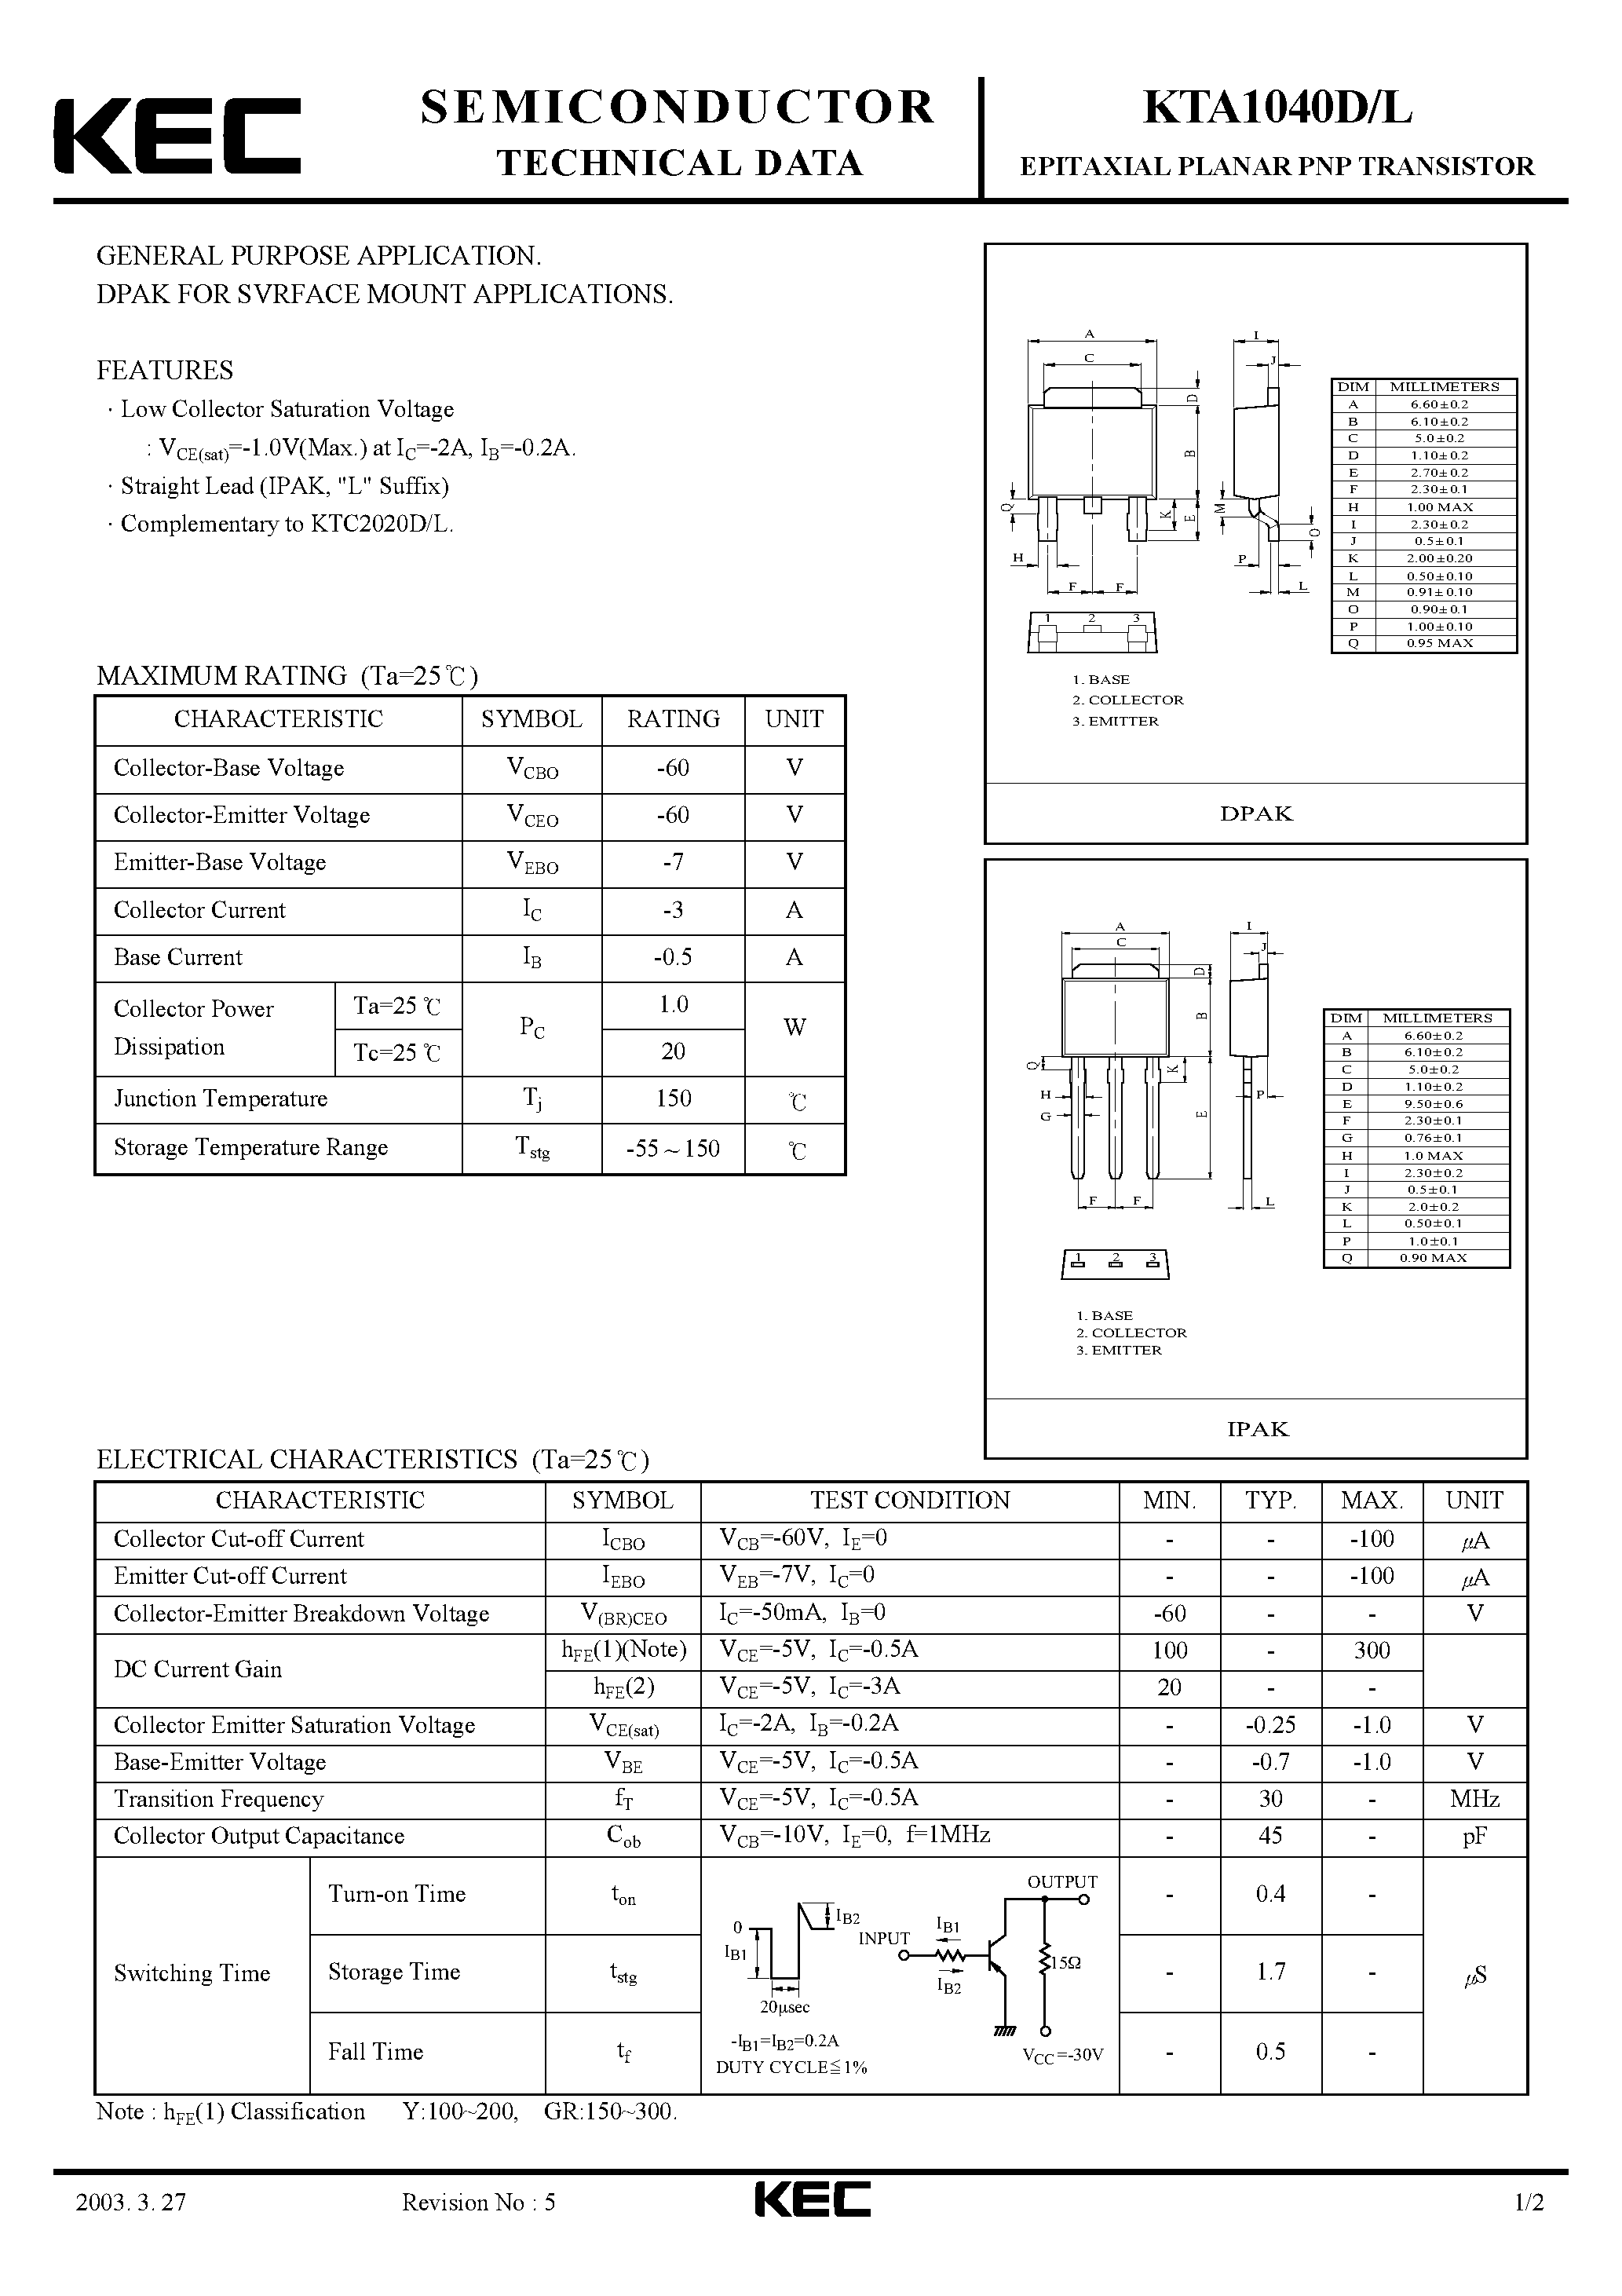 Datasheet KTA1040 - EPITAXIAL PLANAR PNP TRANSISTOR (GENERAL PURPOSE/ DPAK FOR SVRFACE MOUNT) page 1